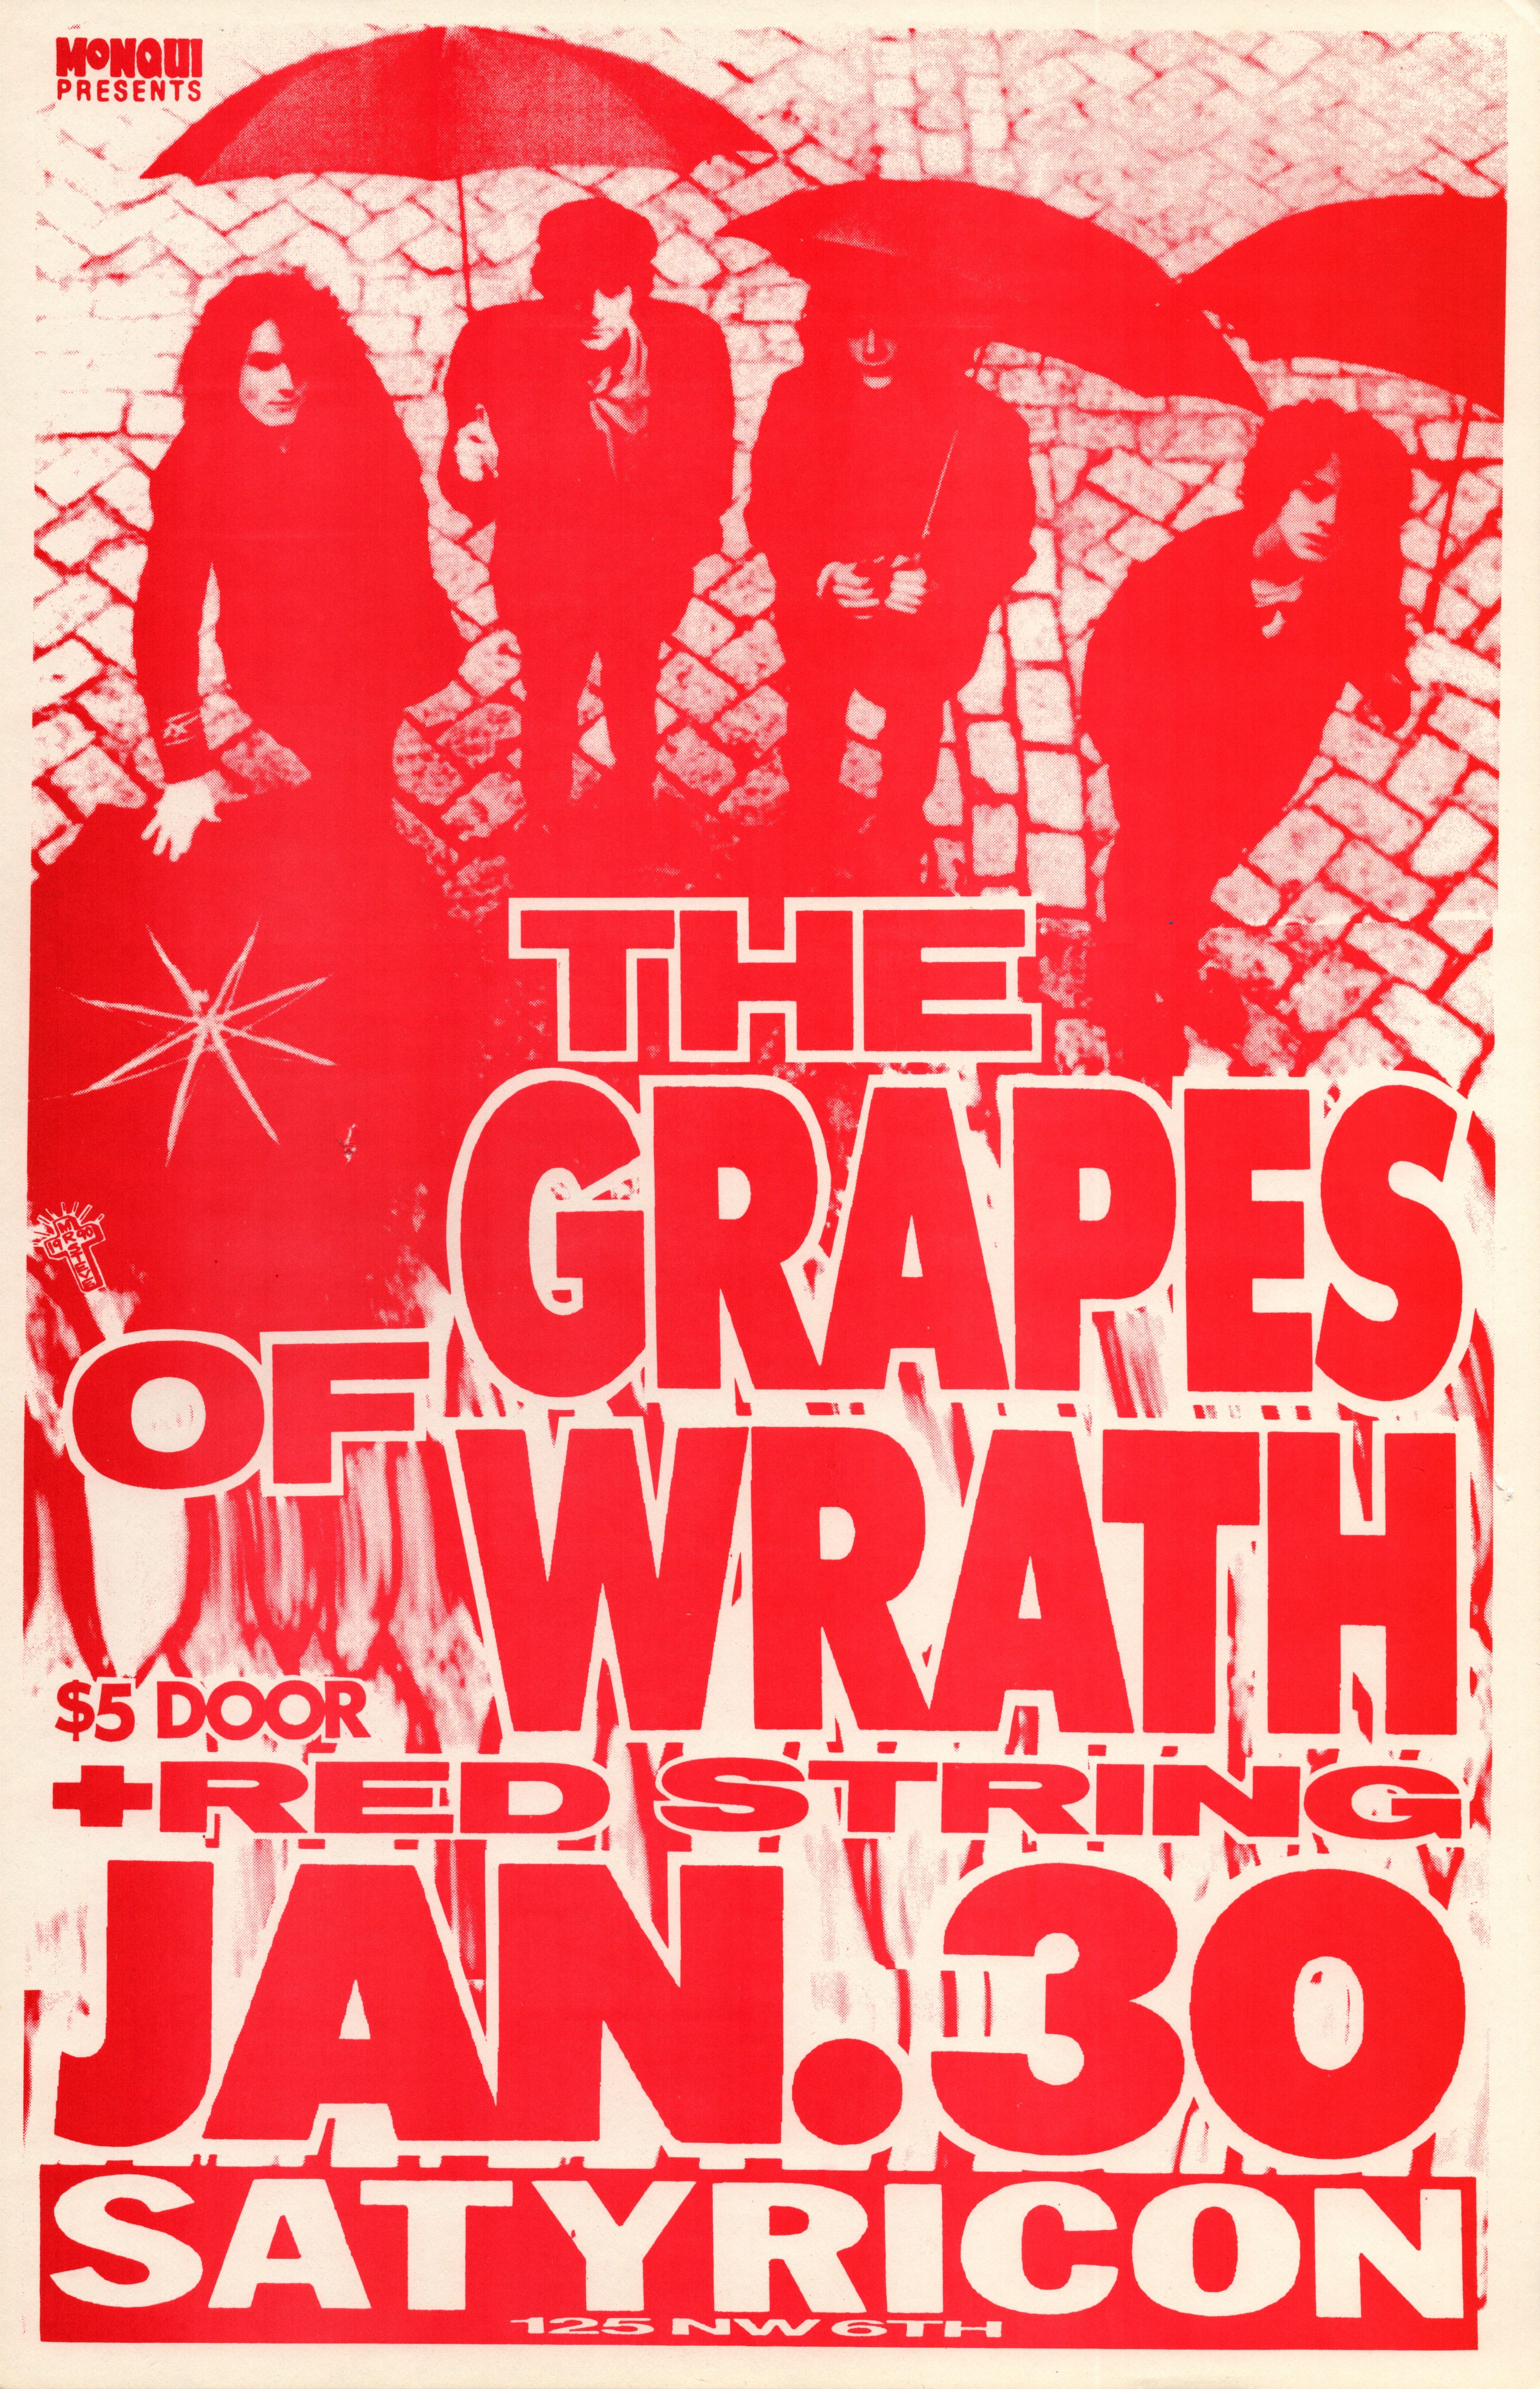 MXP-171.3 Grapes Of Wrath 1985 Satyricon  Jan 30 Concert Poster